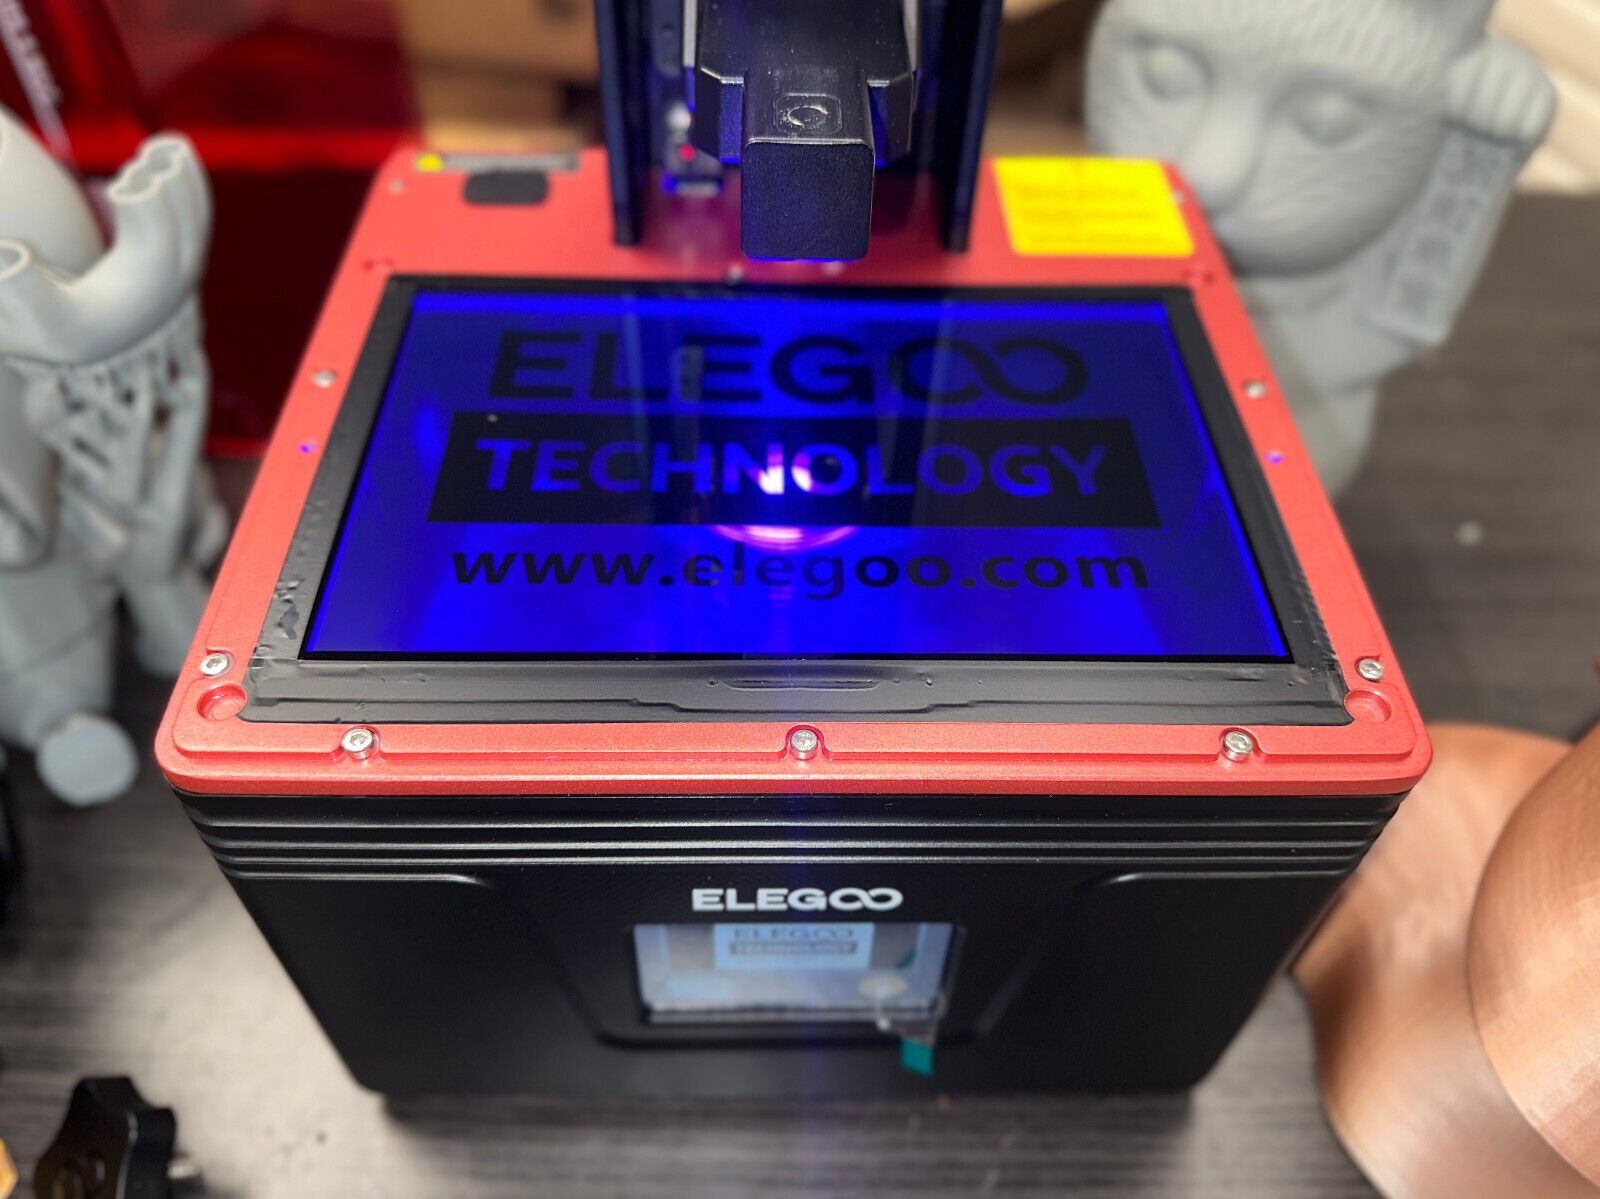 Elegoo Mars 4 Ultra - 9K LCD 3D printer